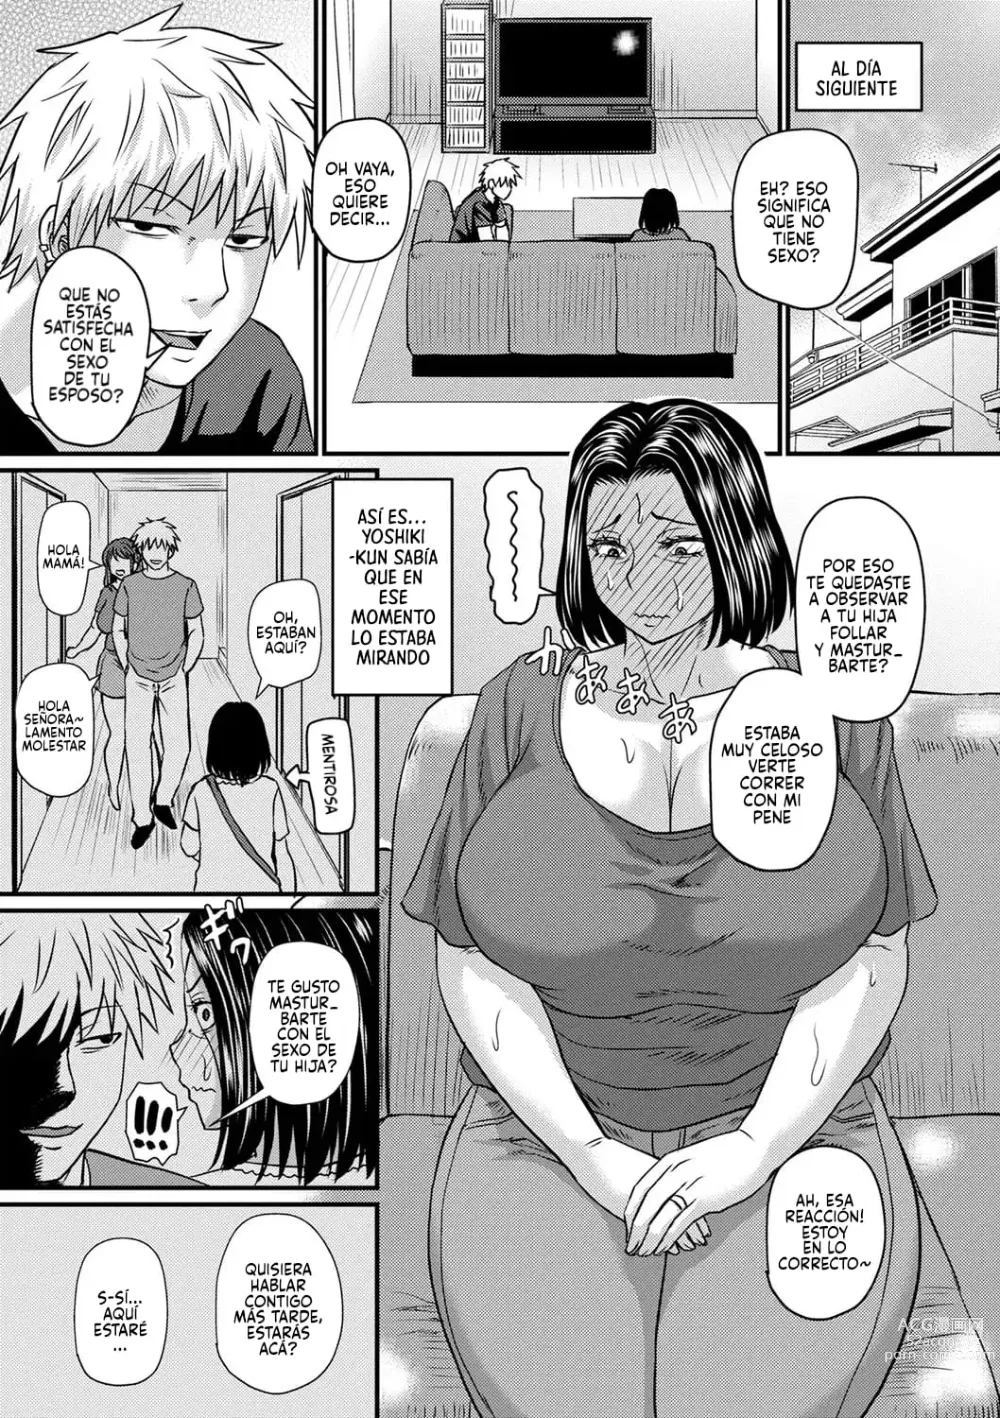 Page 7 of manga El sexo feliz de Mitsuyo